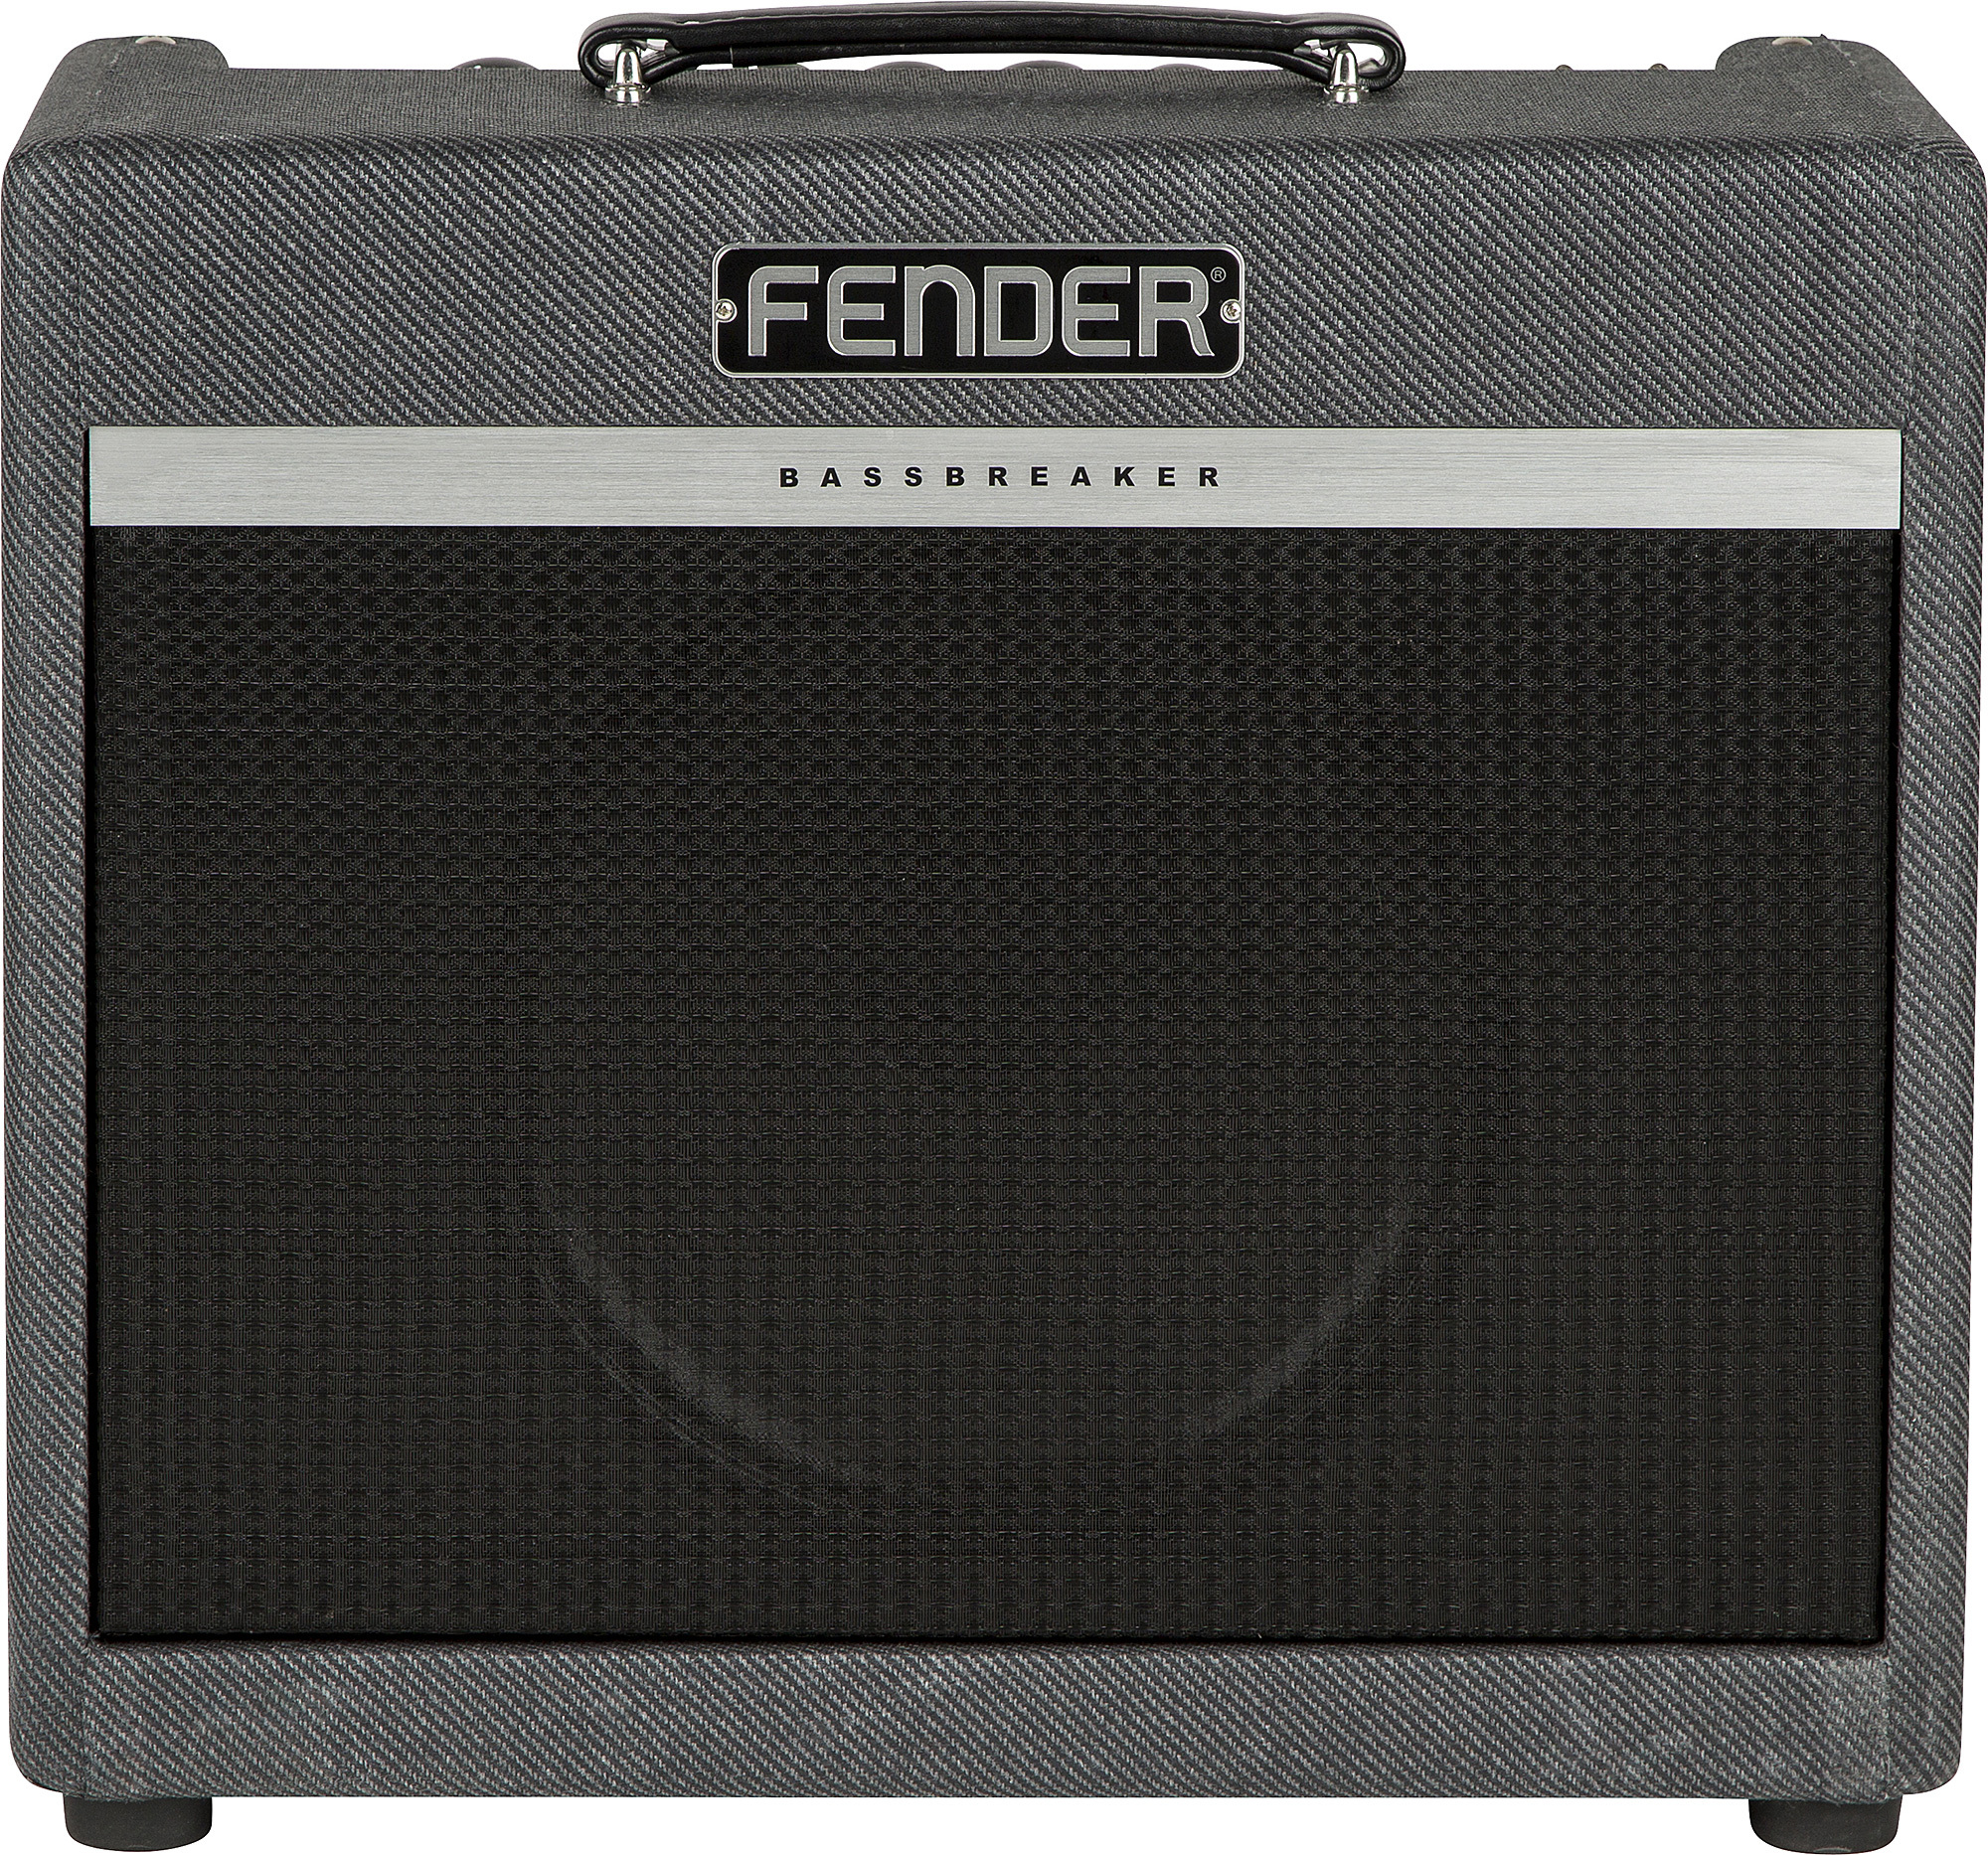 Fender Bassbreaker 15 Combo 15w 1x12 Gray Tweed - Electric guitar combo amp - Main picture